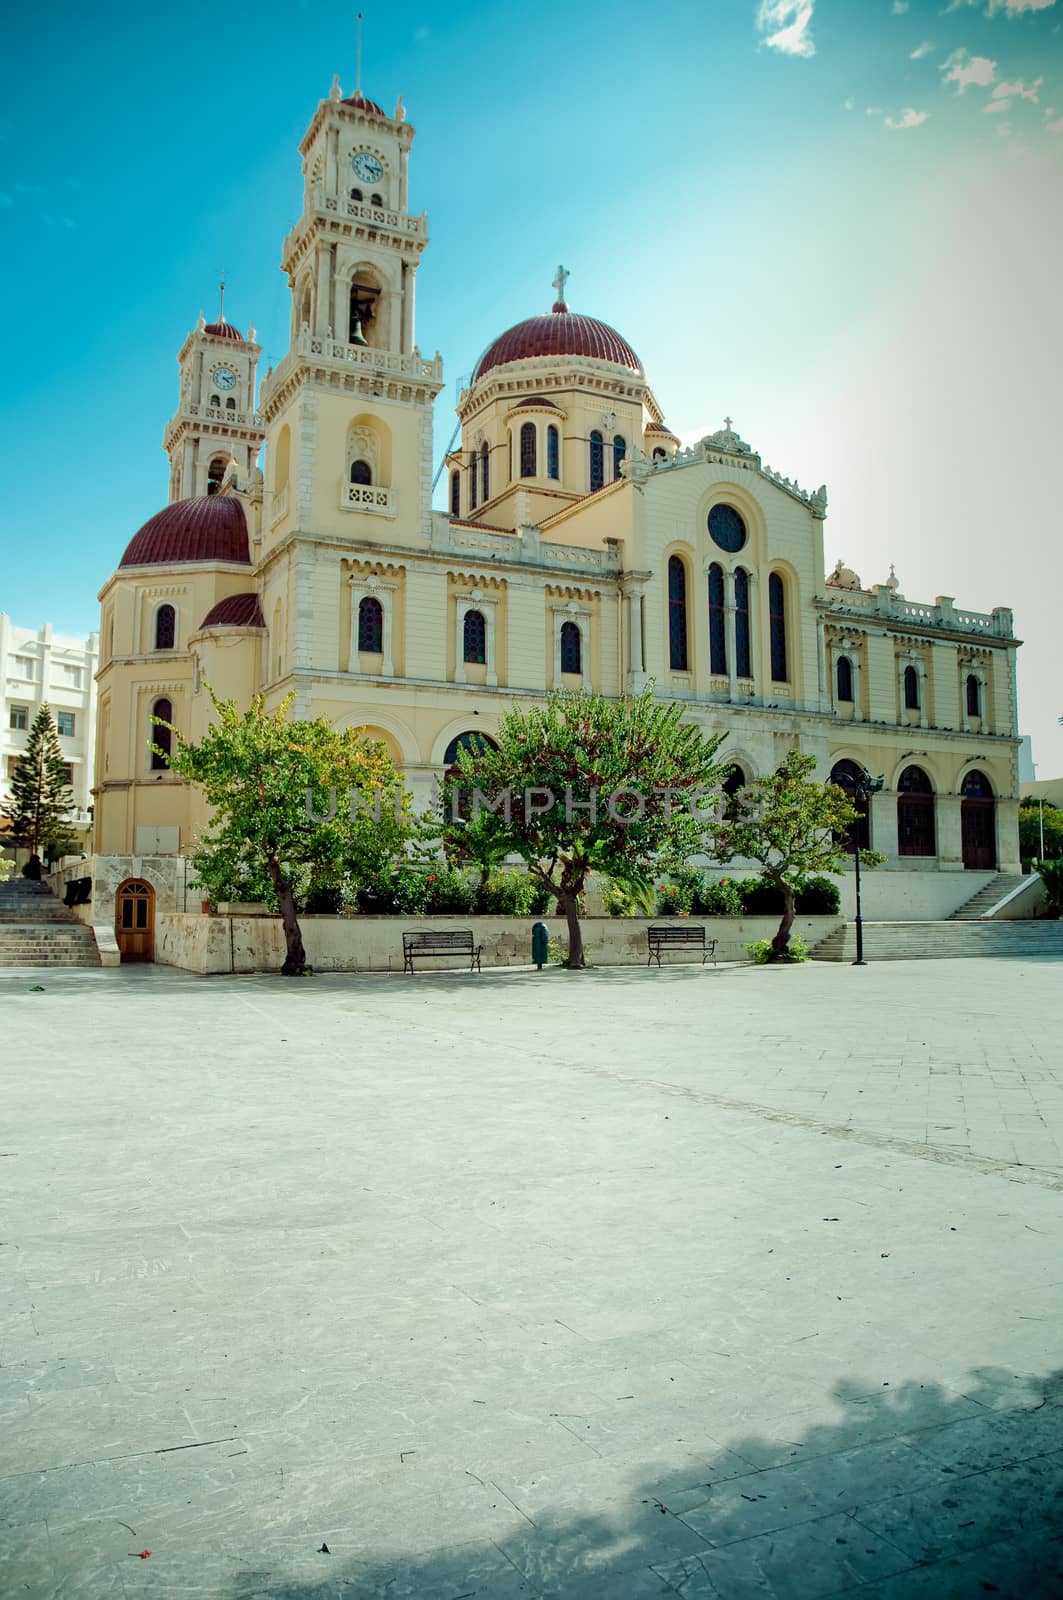 The basilica in the city of Heraklion. The island of Crete. Greece.